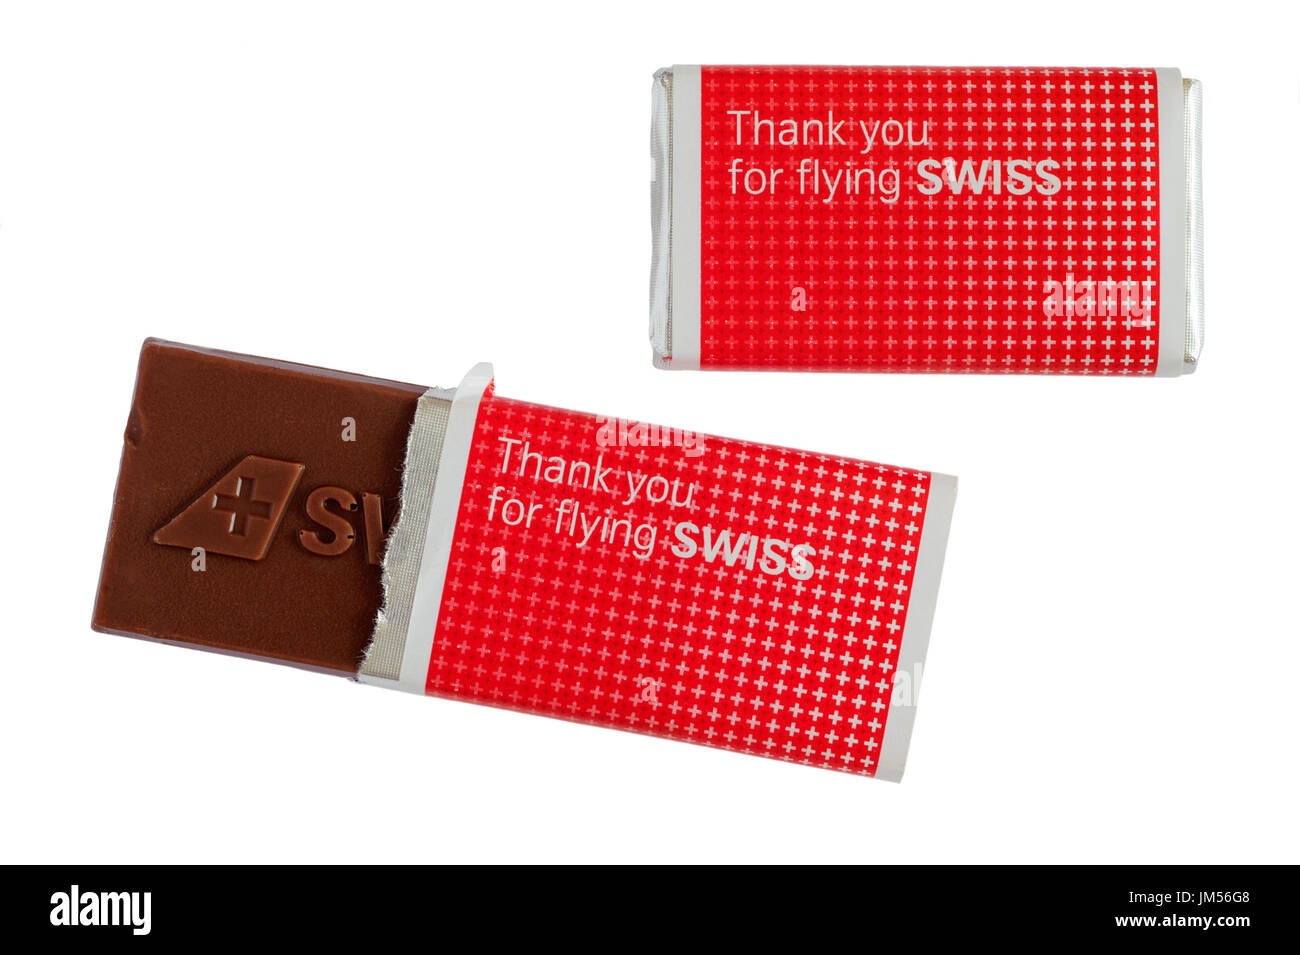 Barras de chocolate con leche da a los pasajeros que vuelen con la aerolínea Swiss Air sobre un fondo blanco. Foto de stock